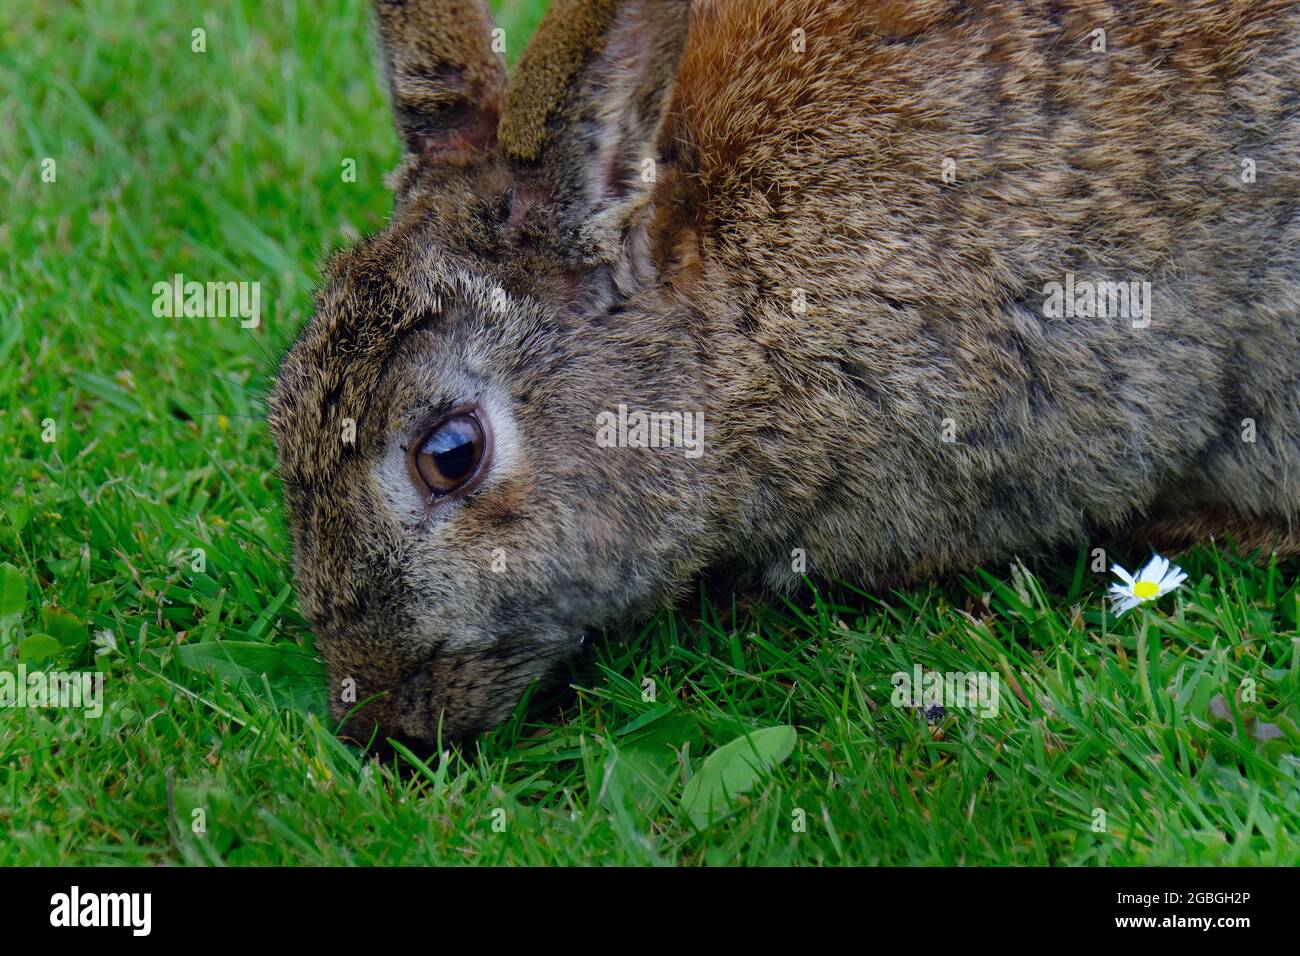 Wild rabbit feeding in urban house garden. Stock Photo